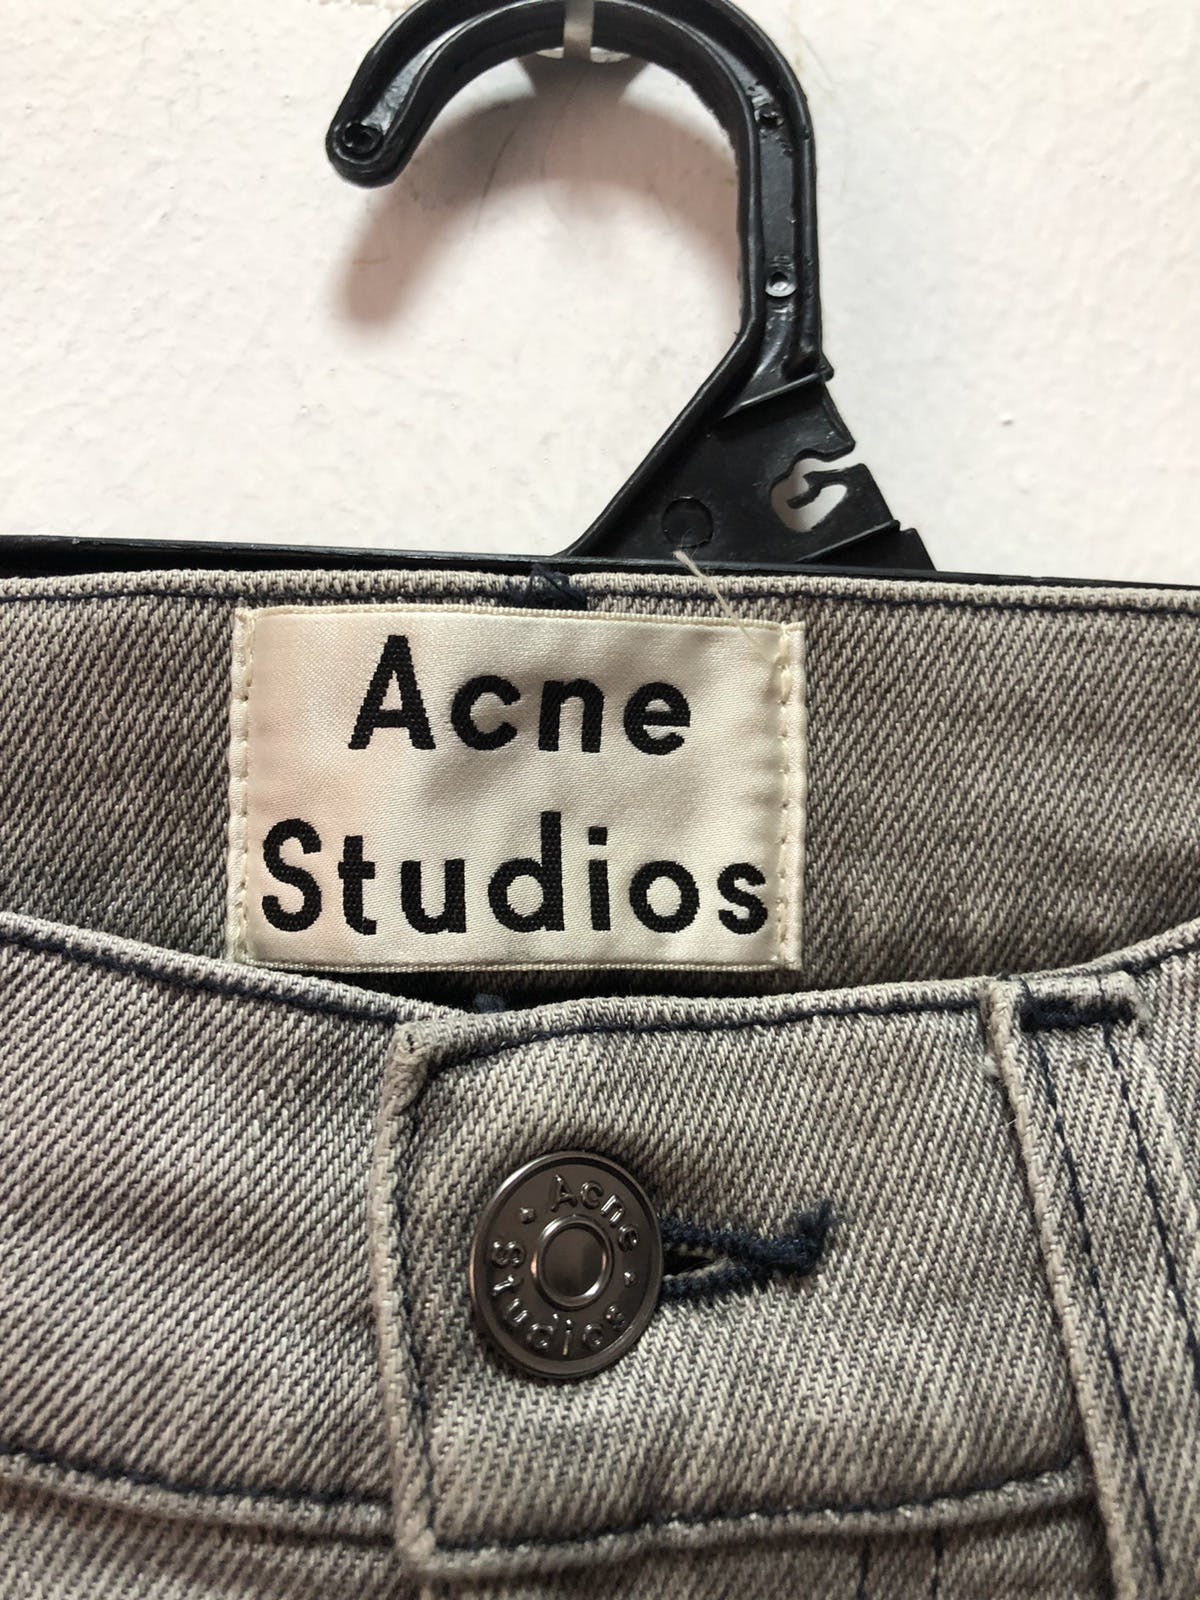 ACNE STUDIO Denim Pants Grey Ace Slate Italy Made - 2